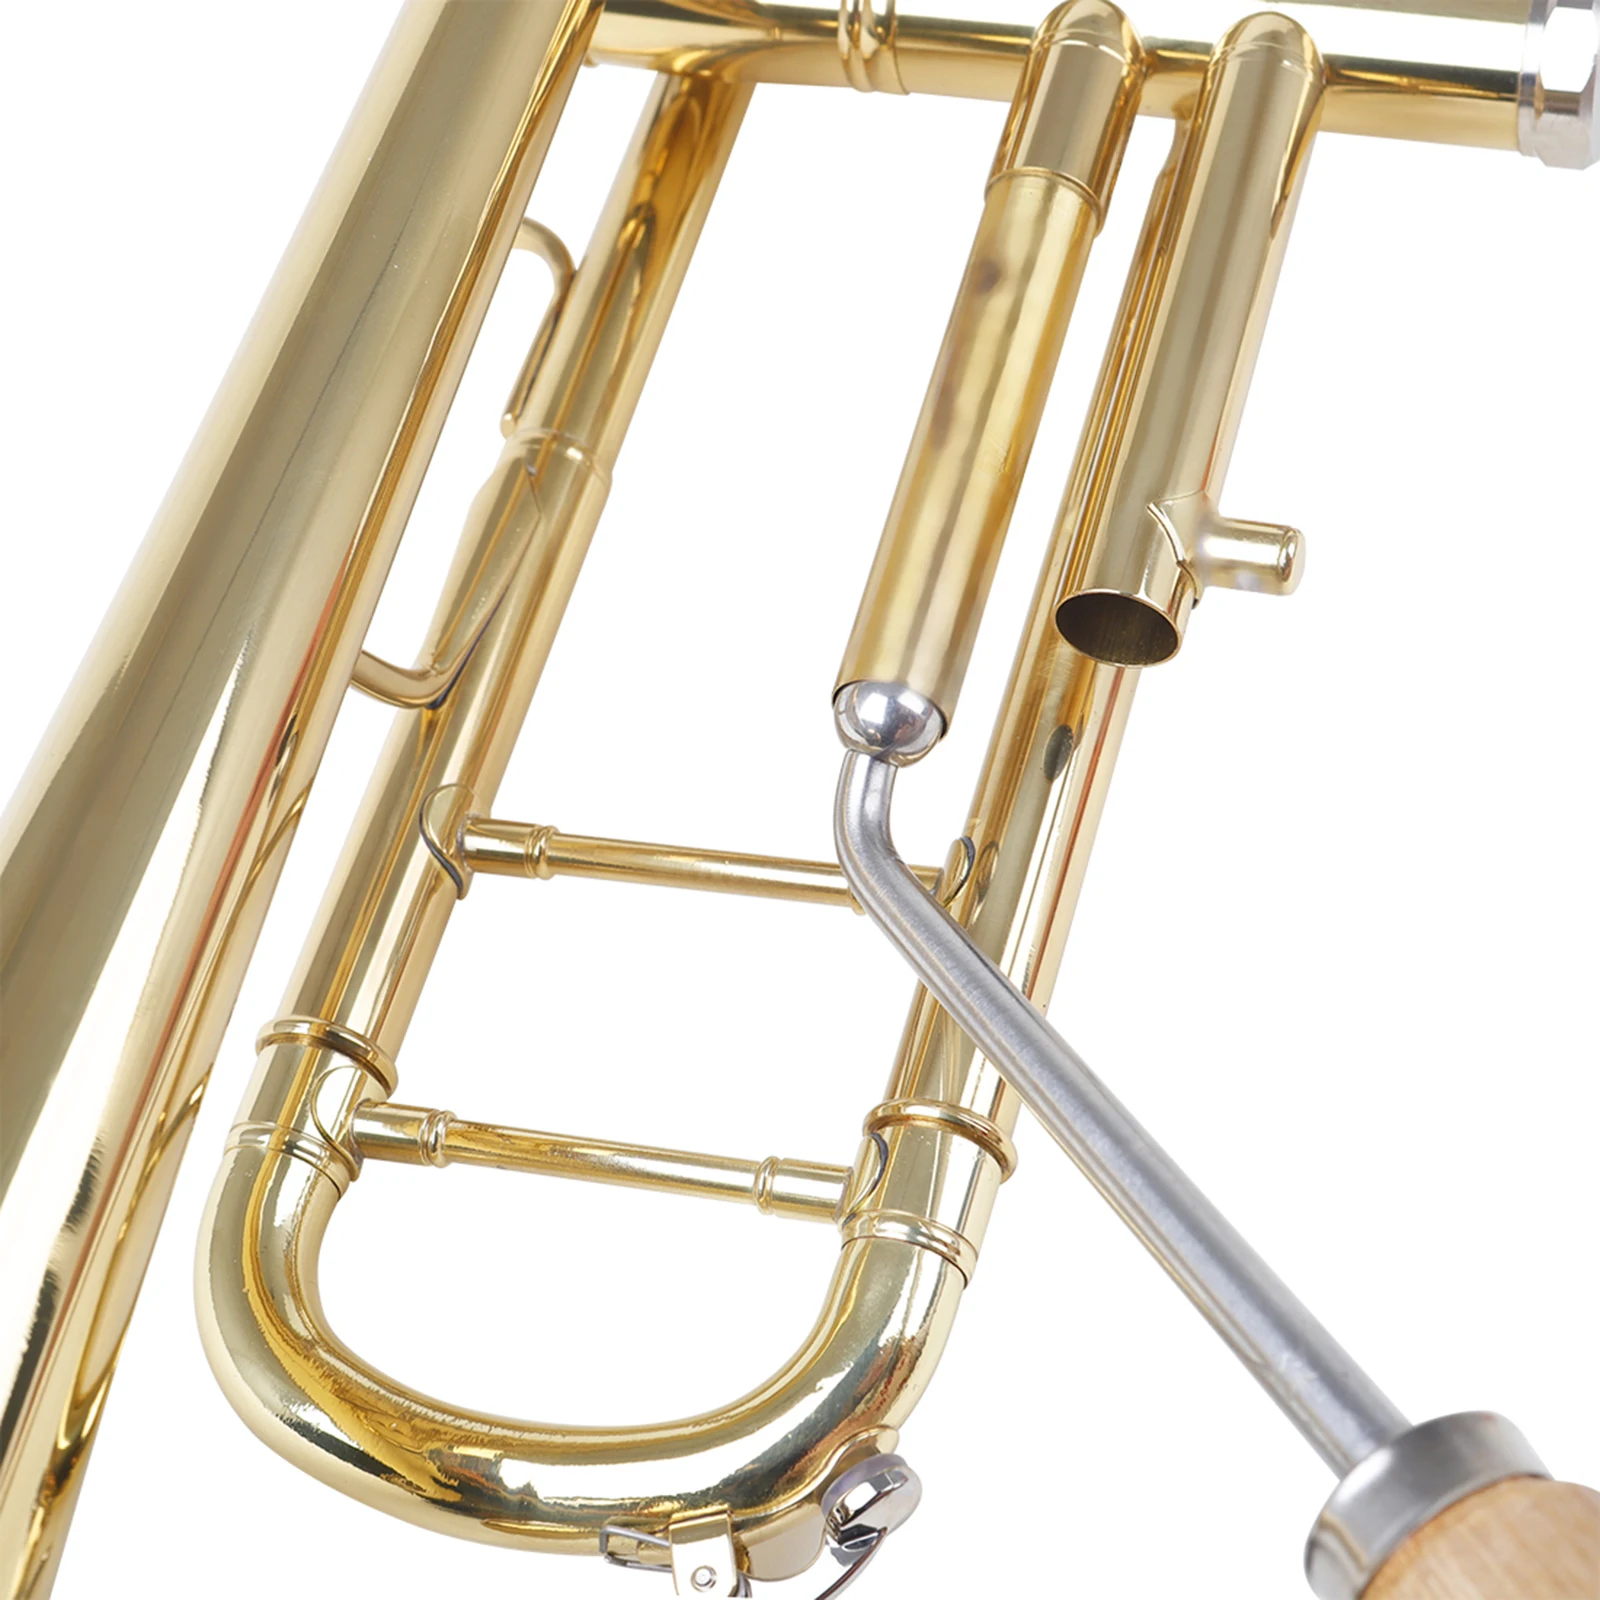 Durable Trumpet Repair Tool Comfort Handle Wind Instrument Maintenance Care